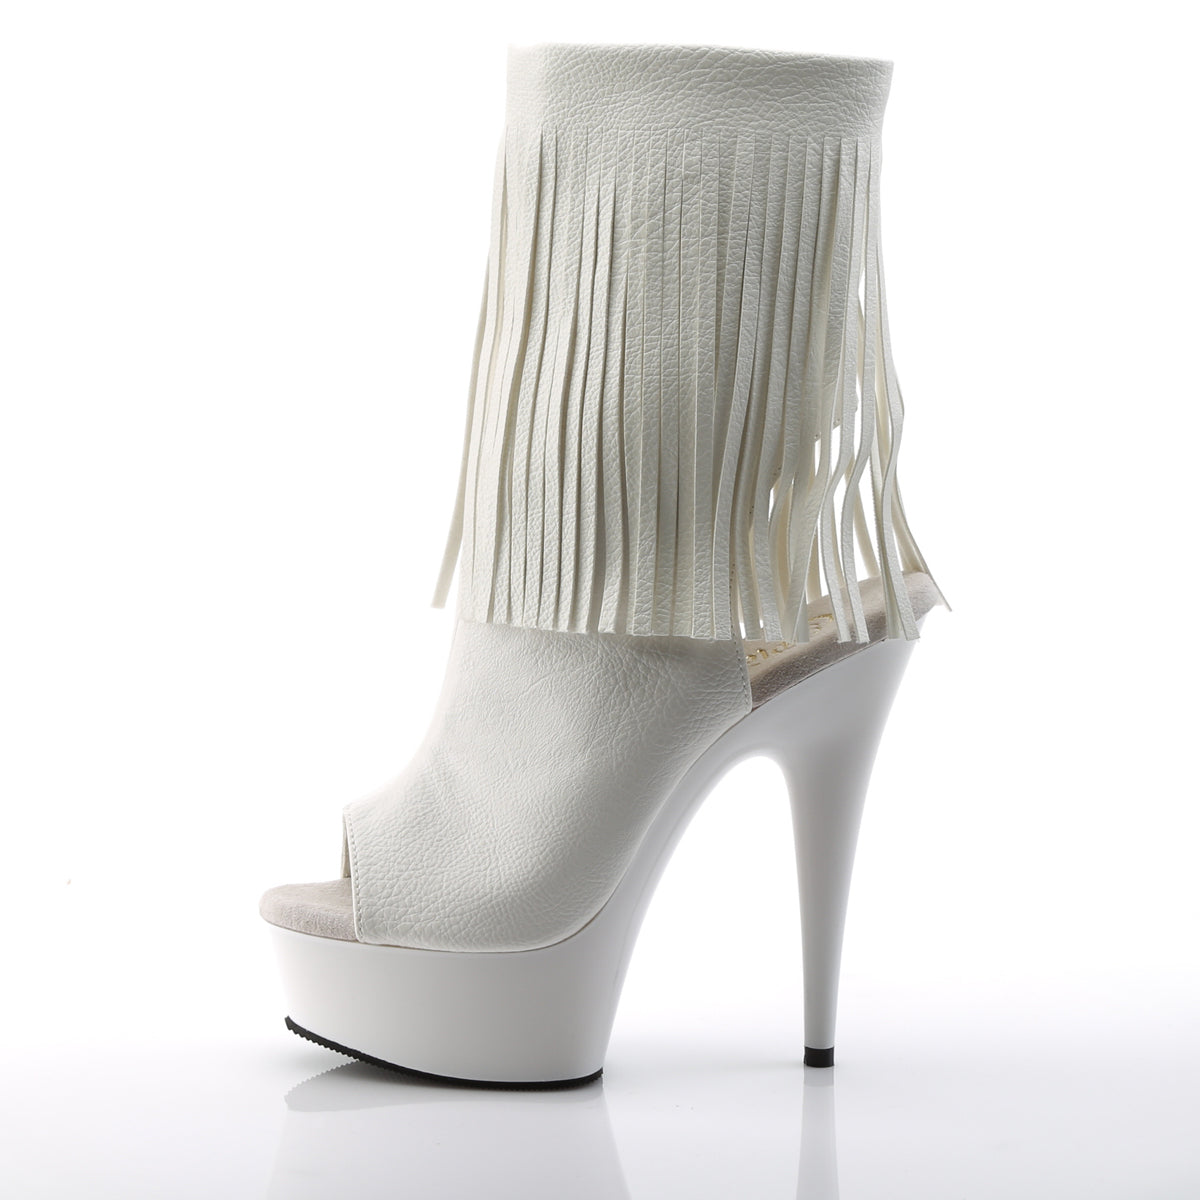 DELIGHT-1019 Pleaser 6 Inch Heel White Pole Dancer Platforms-Pleaser- Sexy Shoes Pole Dance Heels